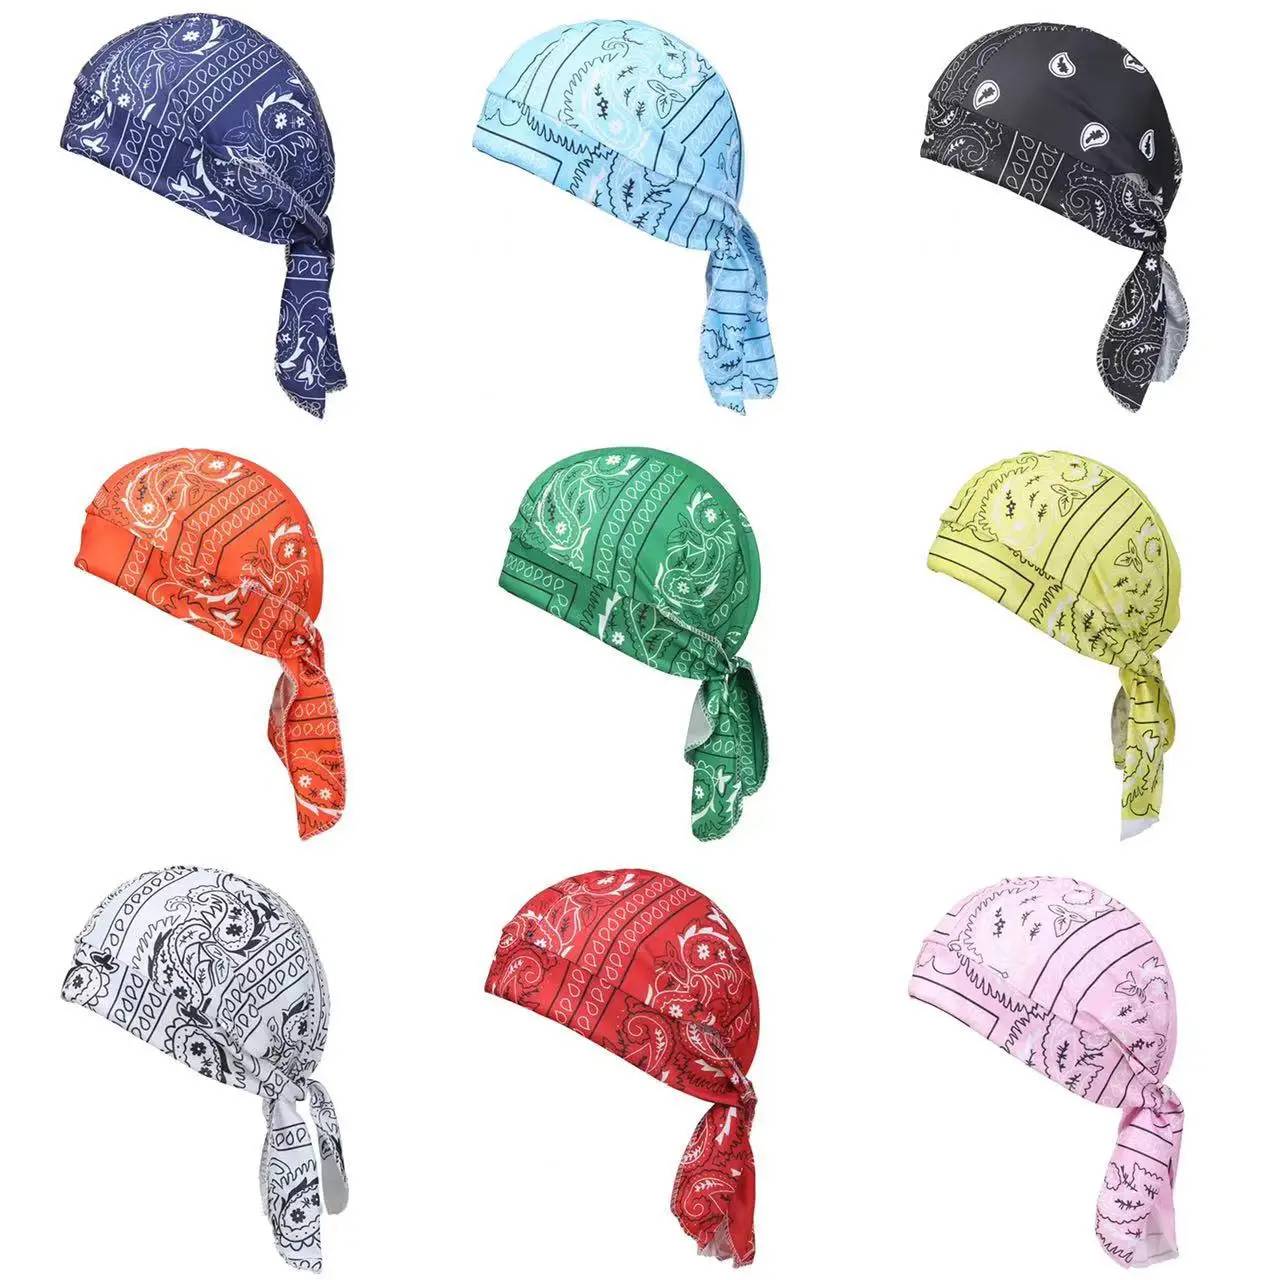 Men's Bandana Scarf Cycling Headscarf Handkerchief Head Outdoor Pirate Hat Motorcycle Printed Paisley Multi Color Hip-Hop Dance